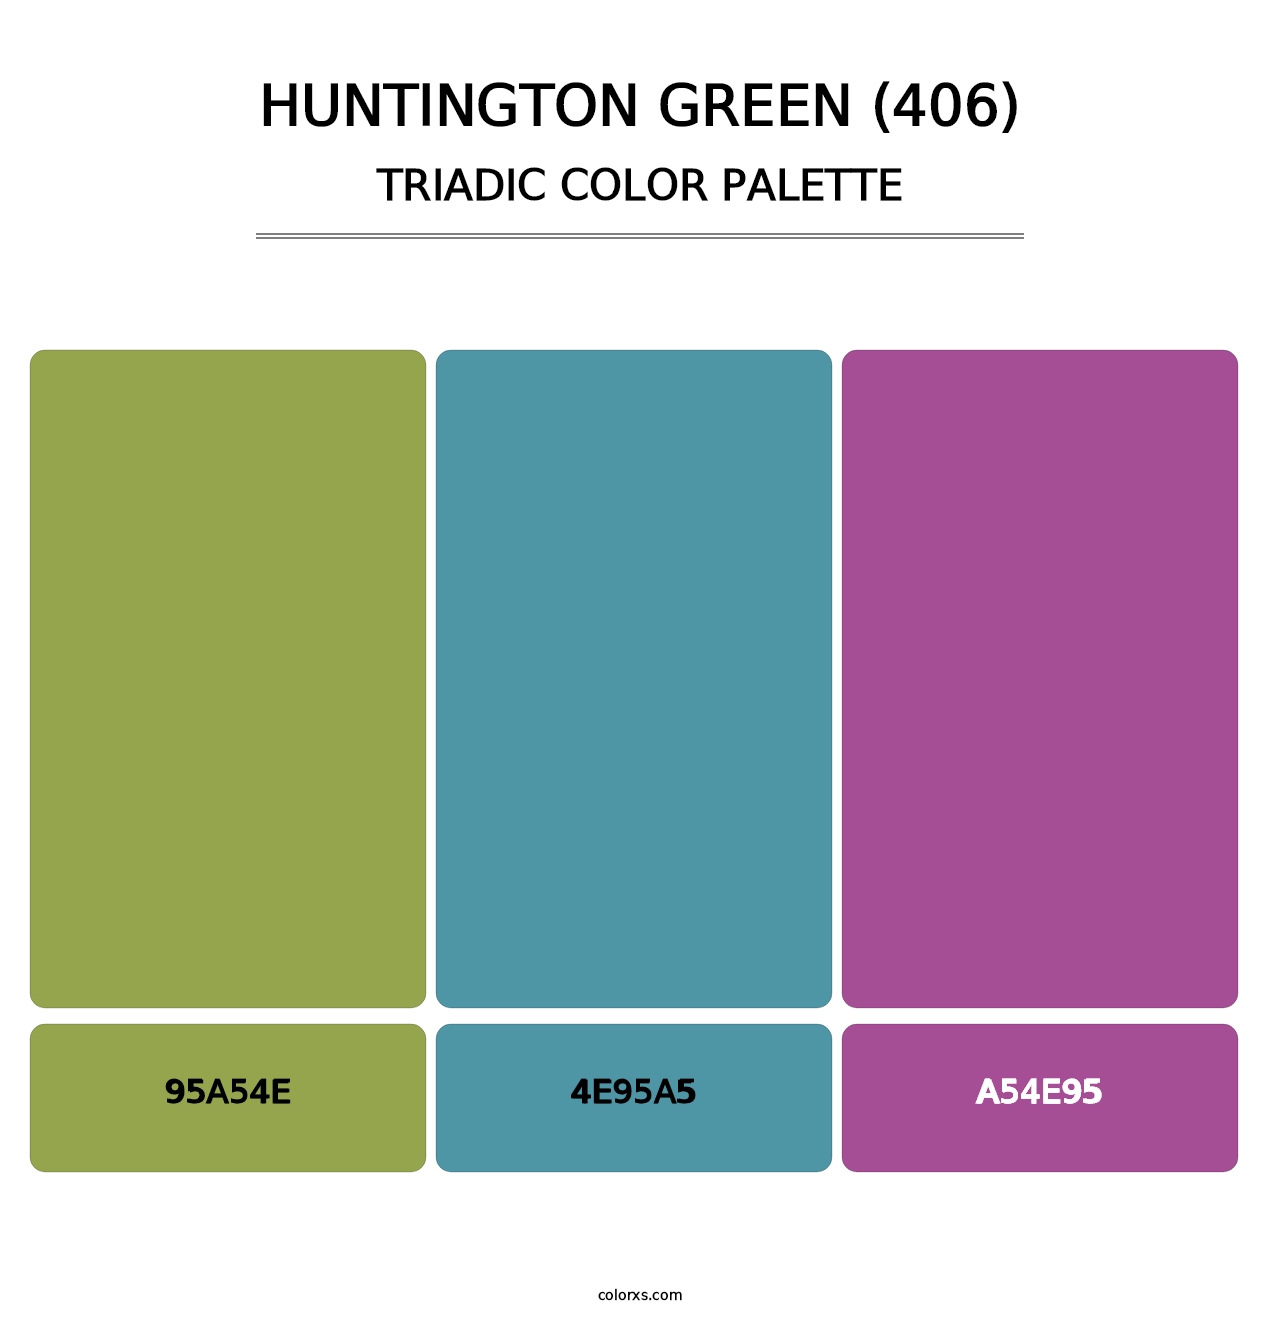 Huntington Green (406) - Triadic Color Palette